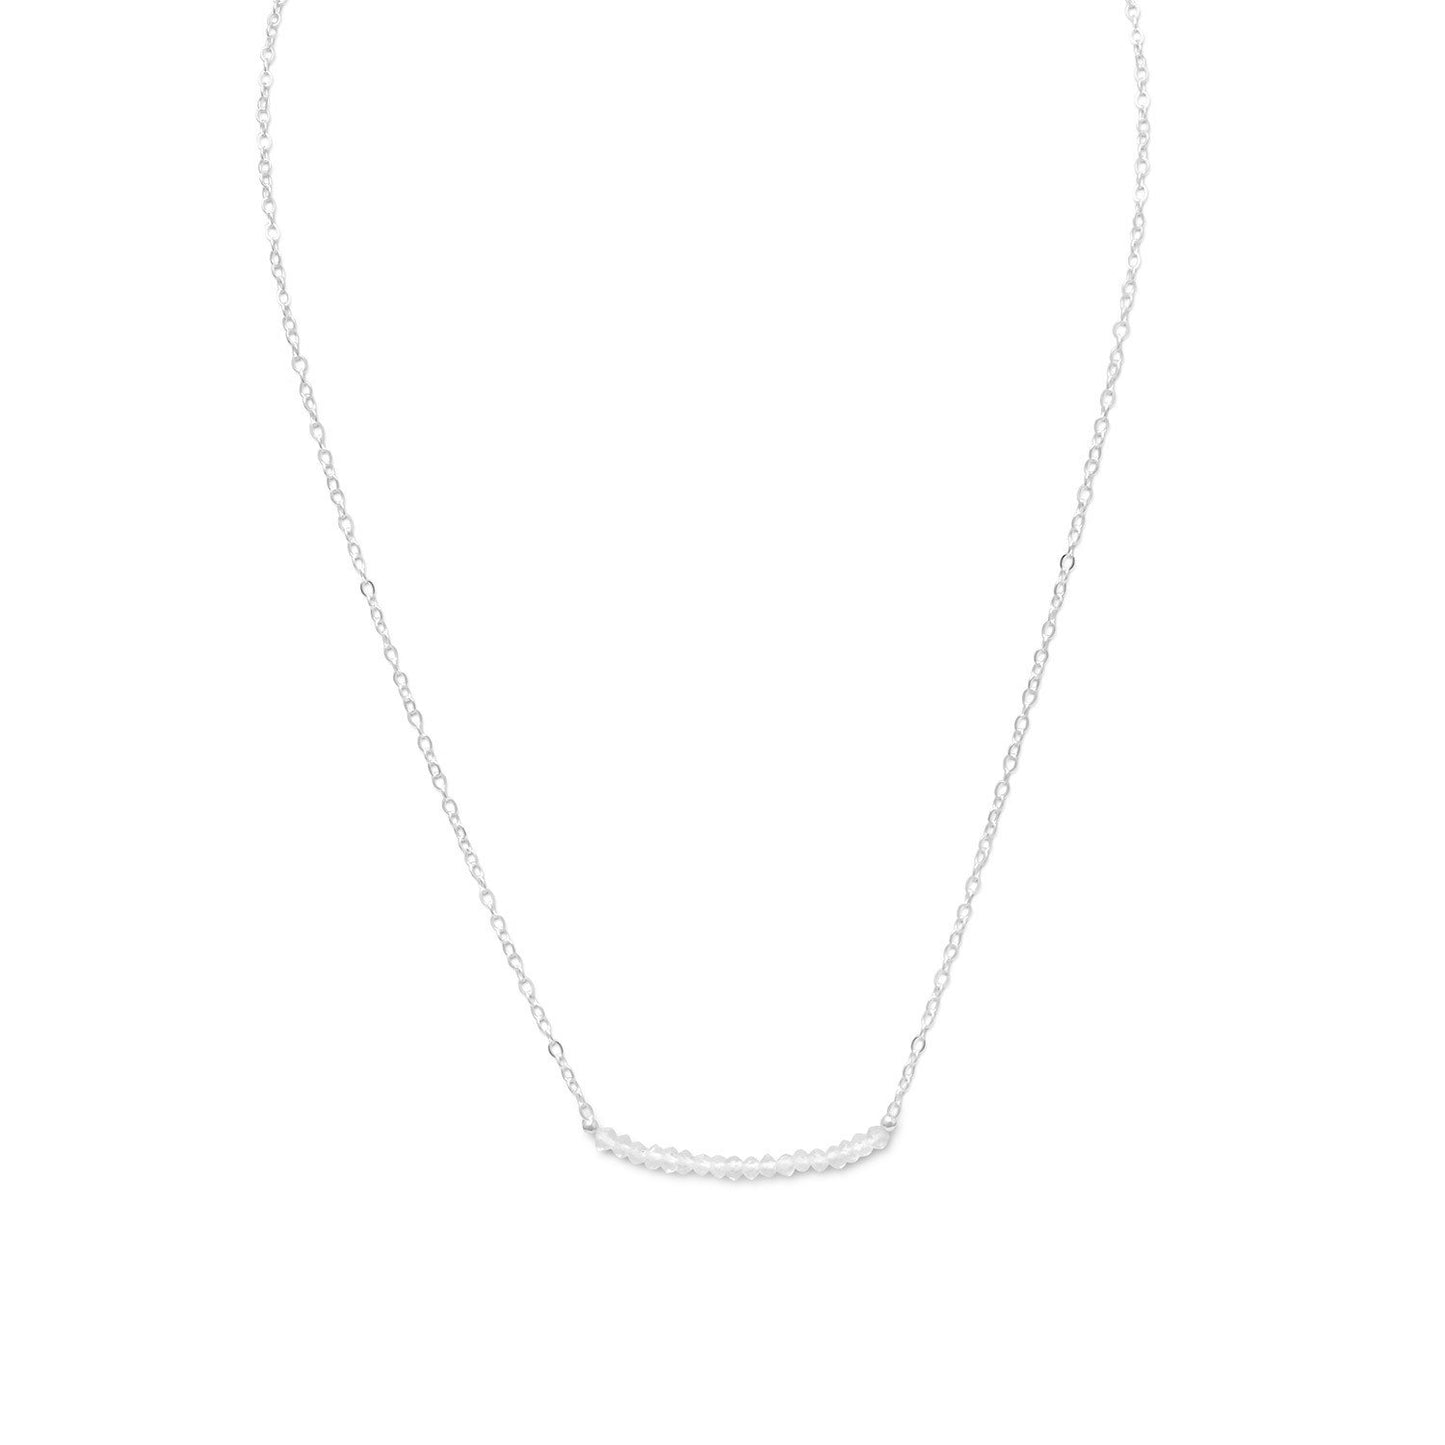 Faceted Clear Quartz Bead Necklace - April Birthstone